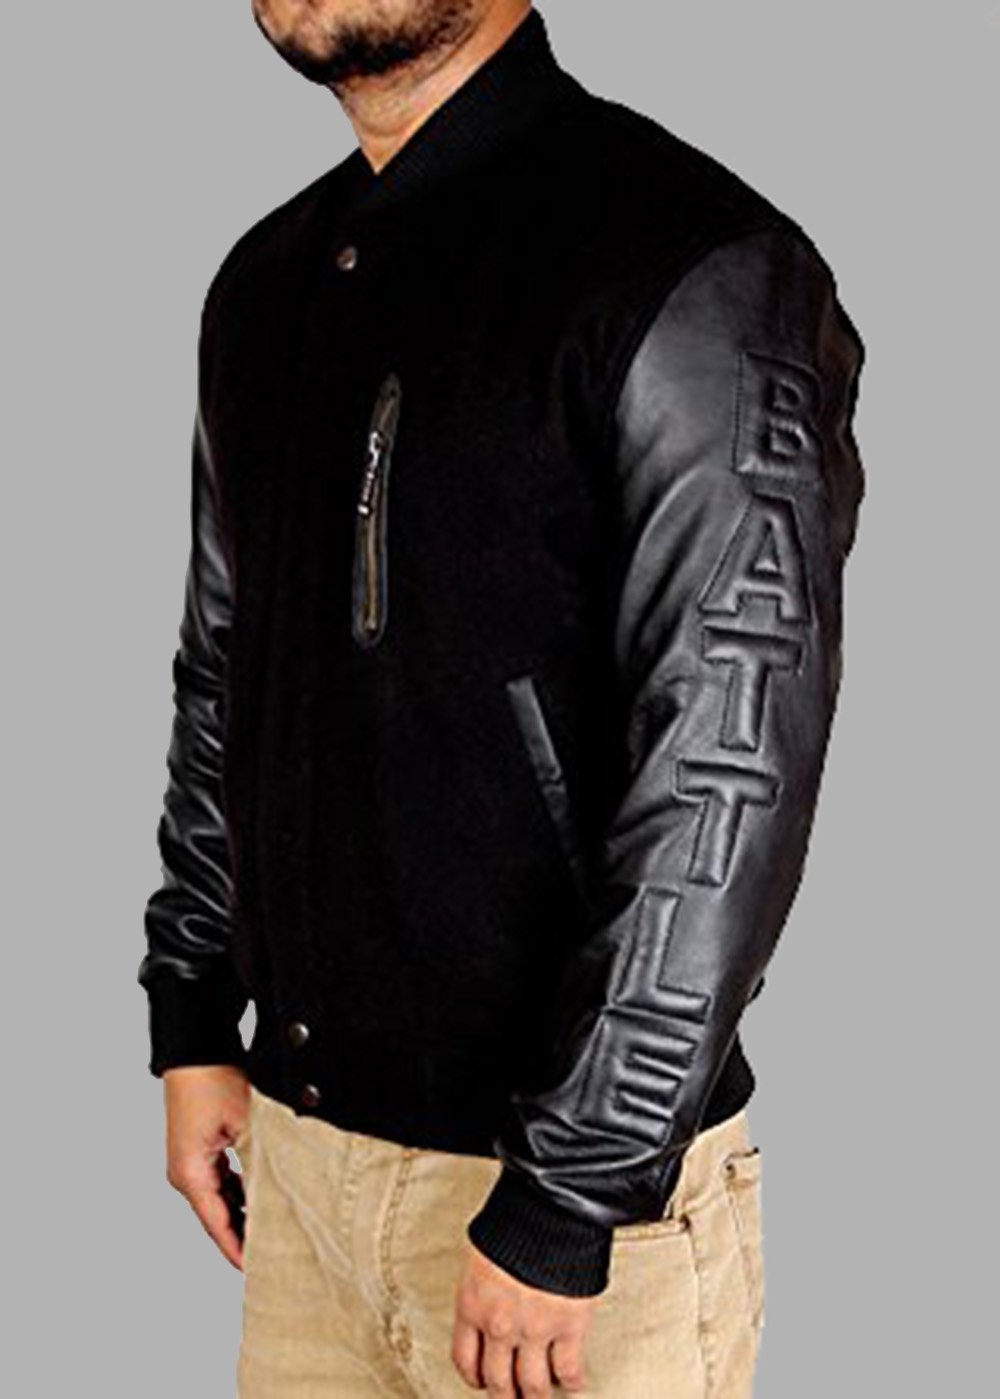 Best Leather Jackets on Twitter: "Michael B Jordan KOBE Destroyer XXIV Leather Sleeves Jacket https://t.co/nlrHIydIz7 #michaelbjordan #Leather #Amazon #onlineshops https://t.co/sUY2SOkpai" / Twitter